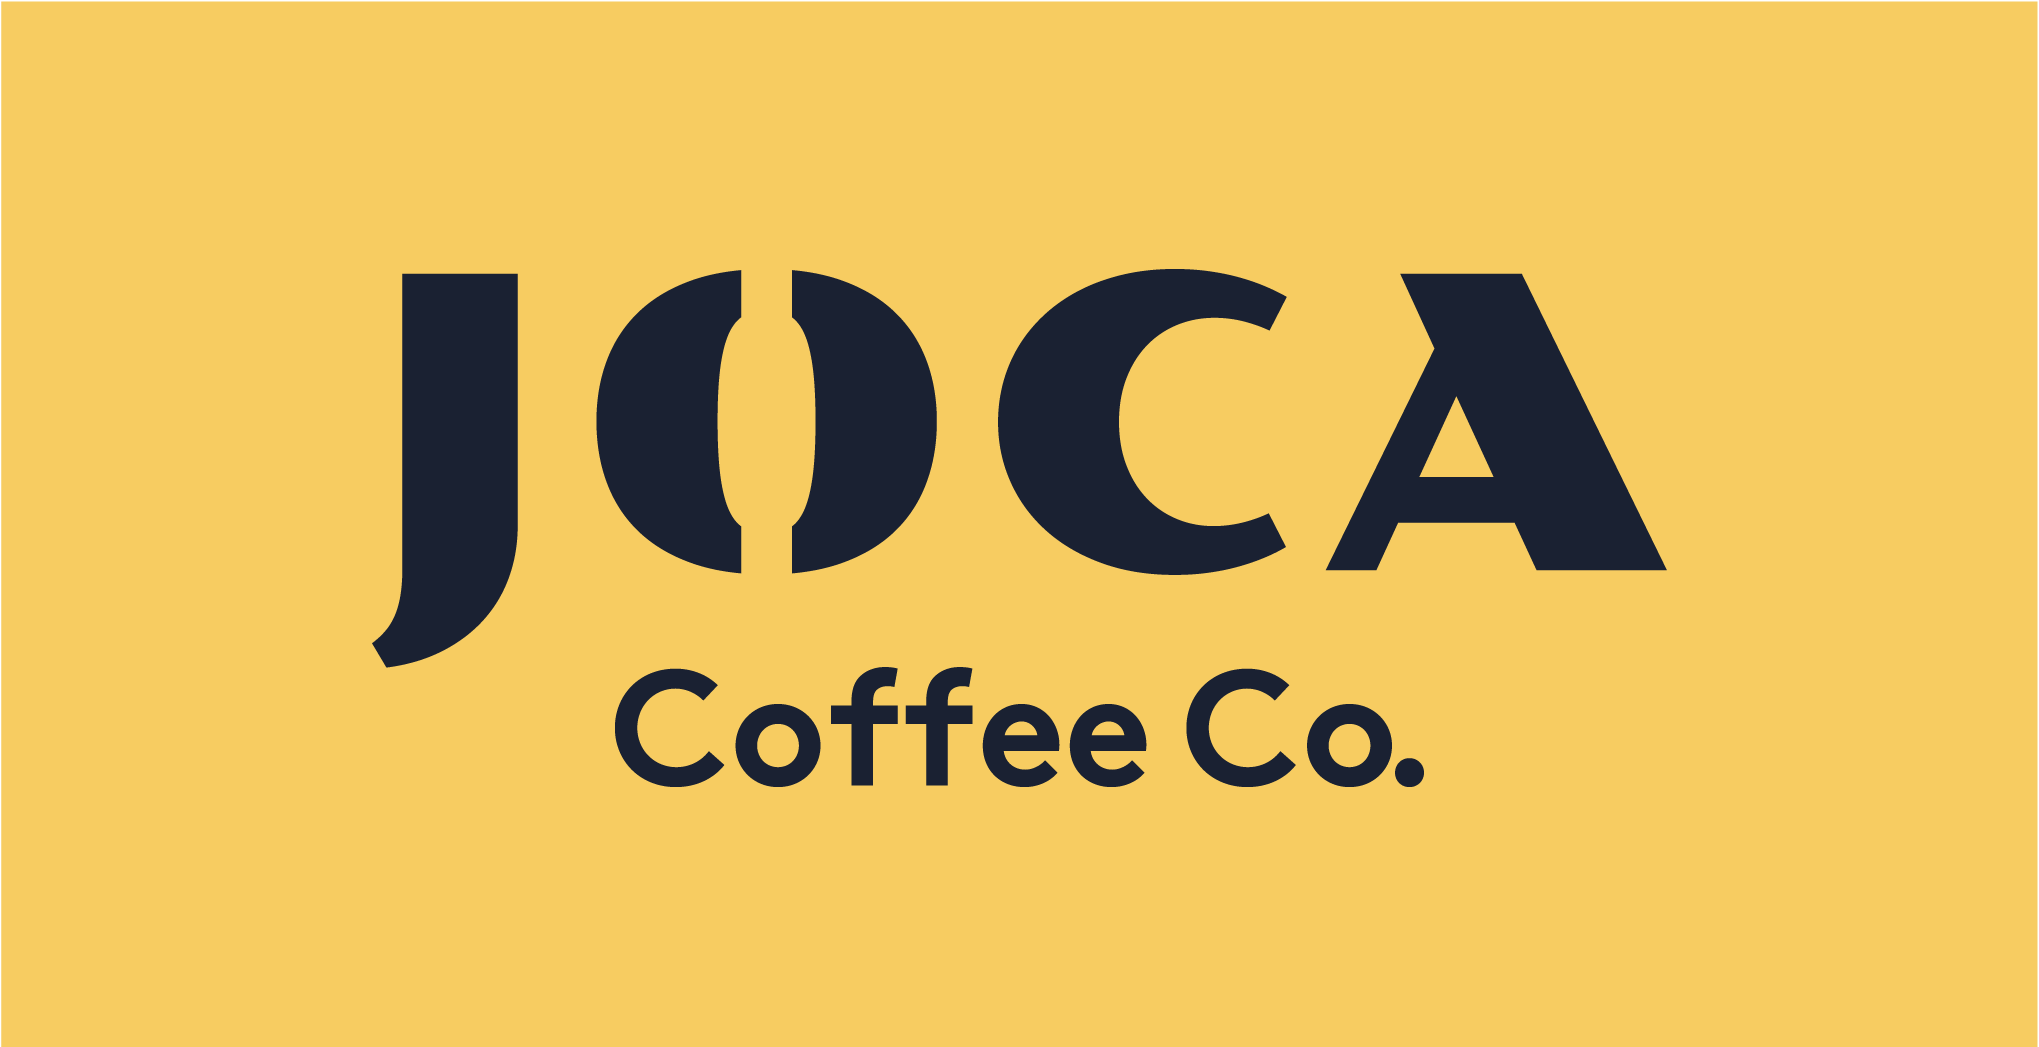 Joca Coffee Co.